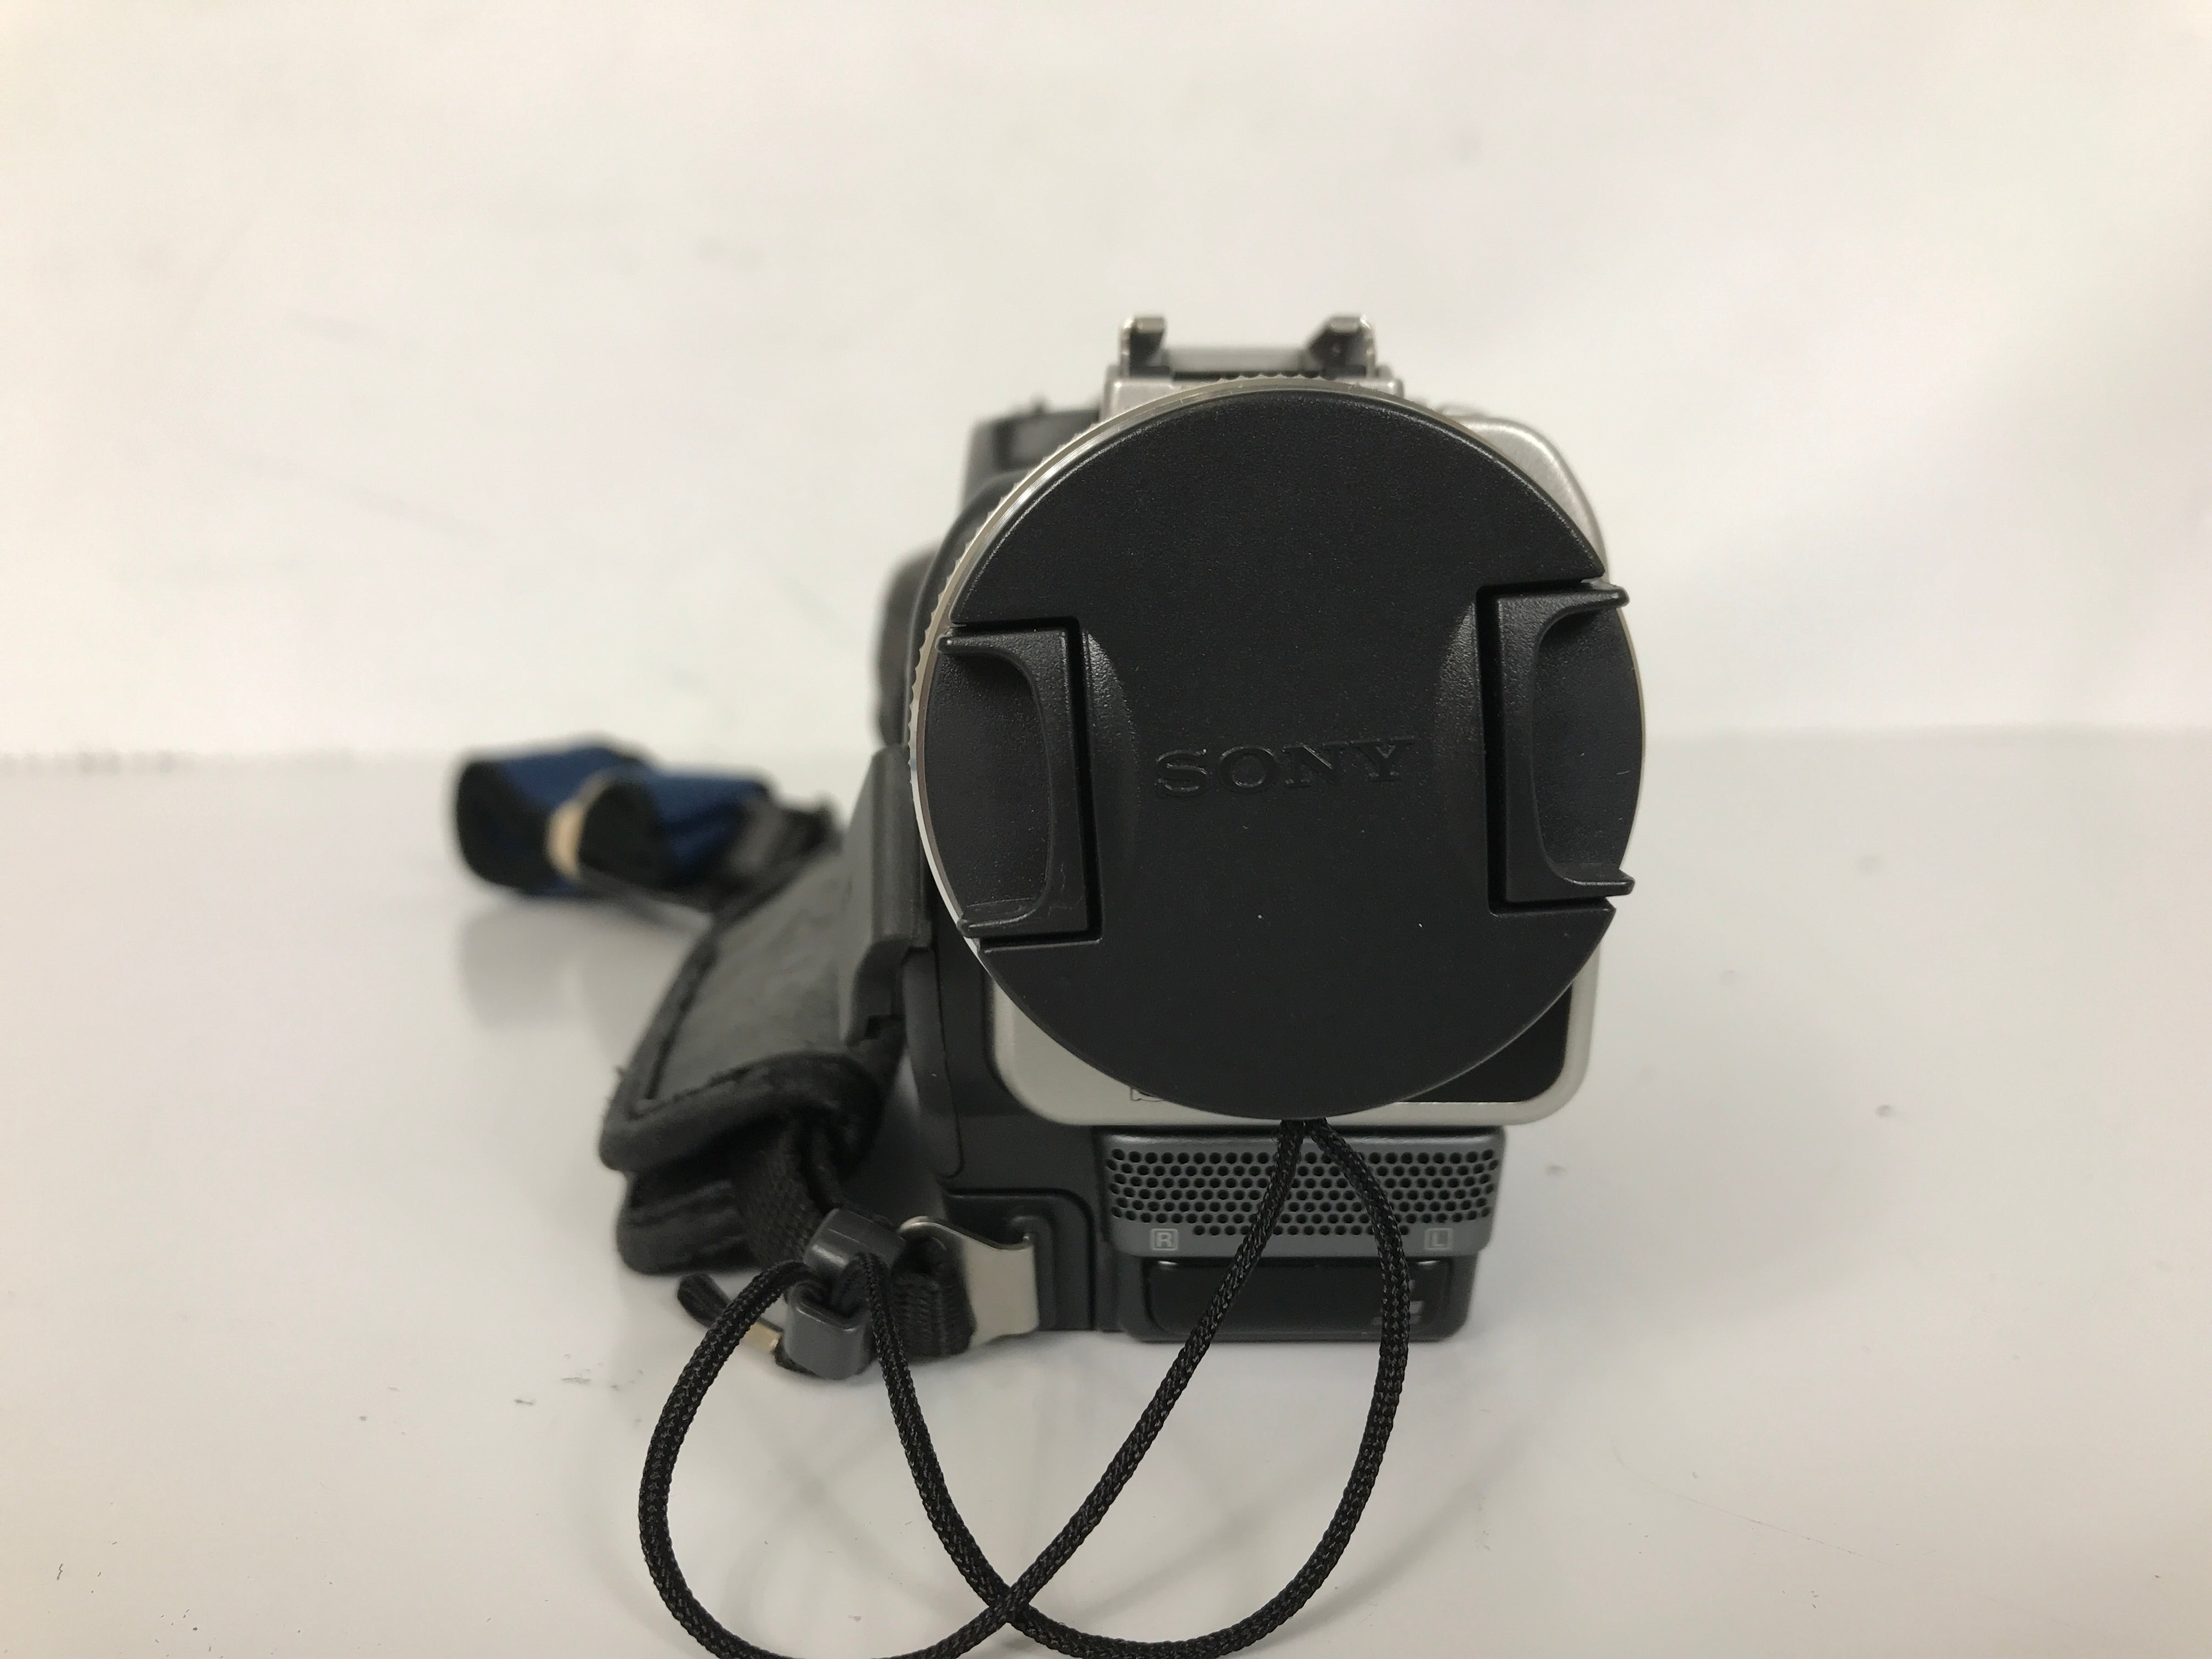 Sony DCR-TRV20 Handycam MiniDV Digital Video Camcorder